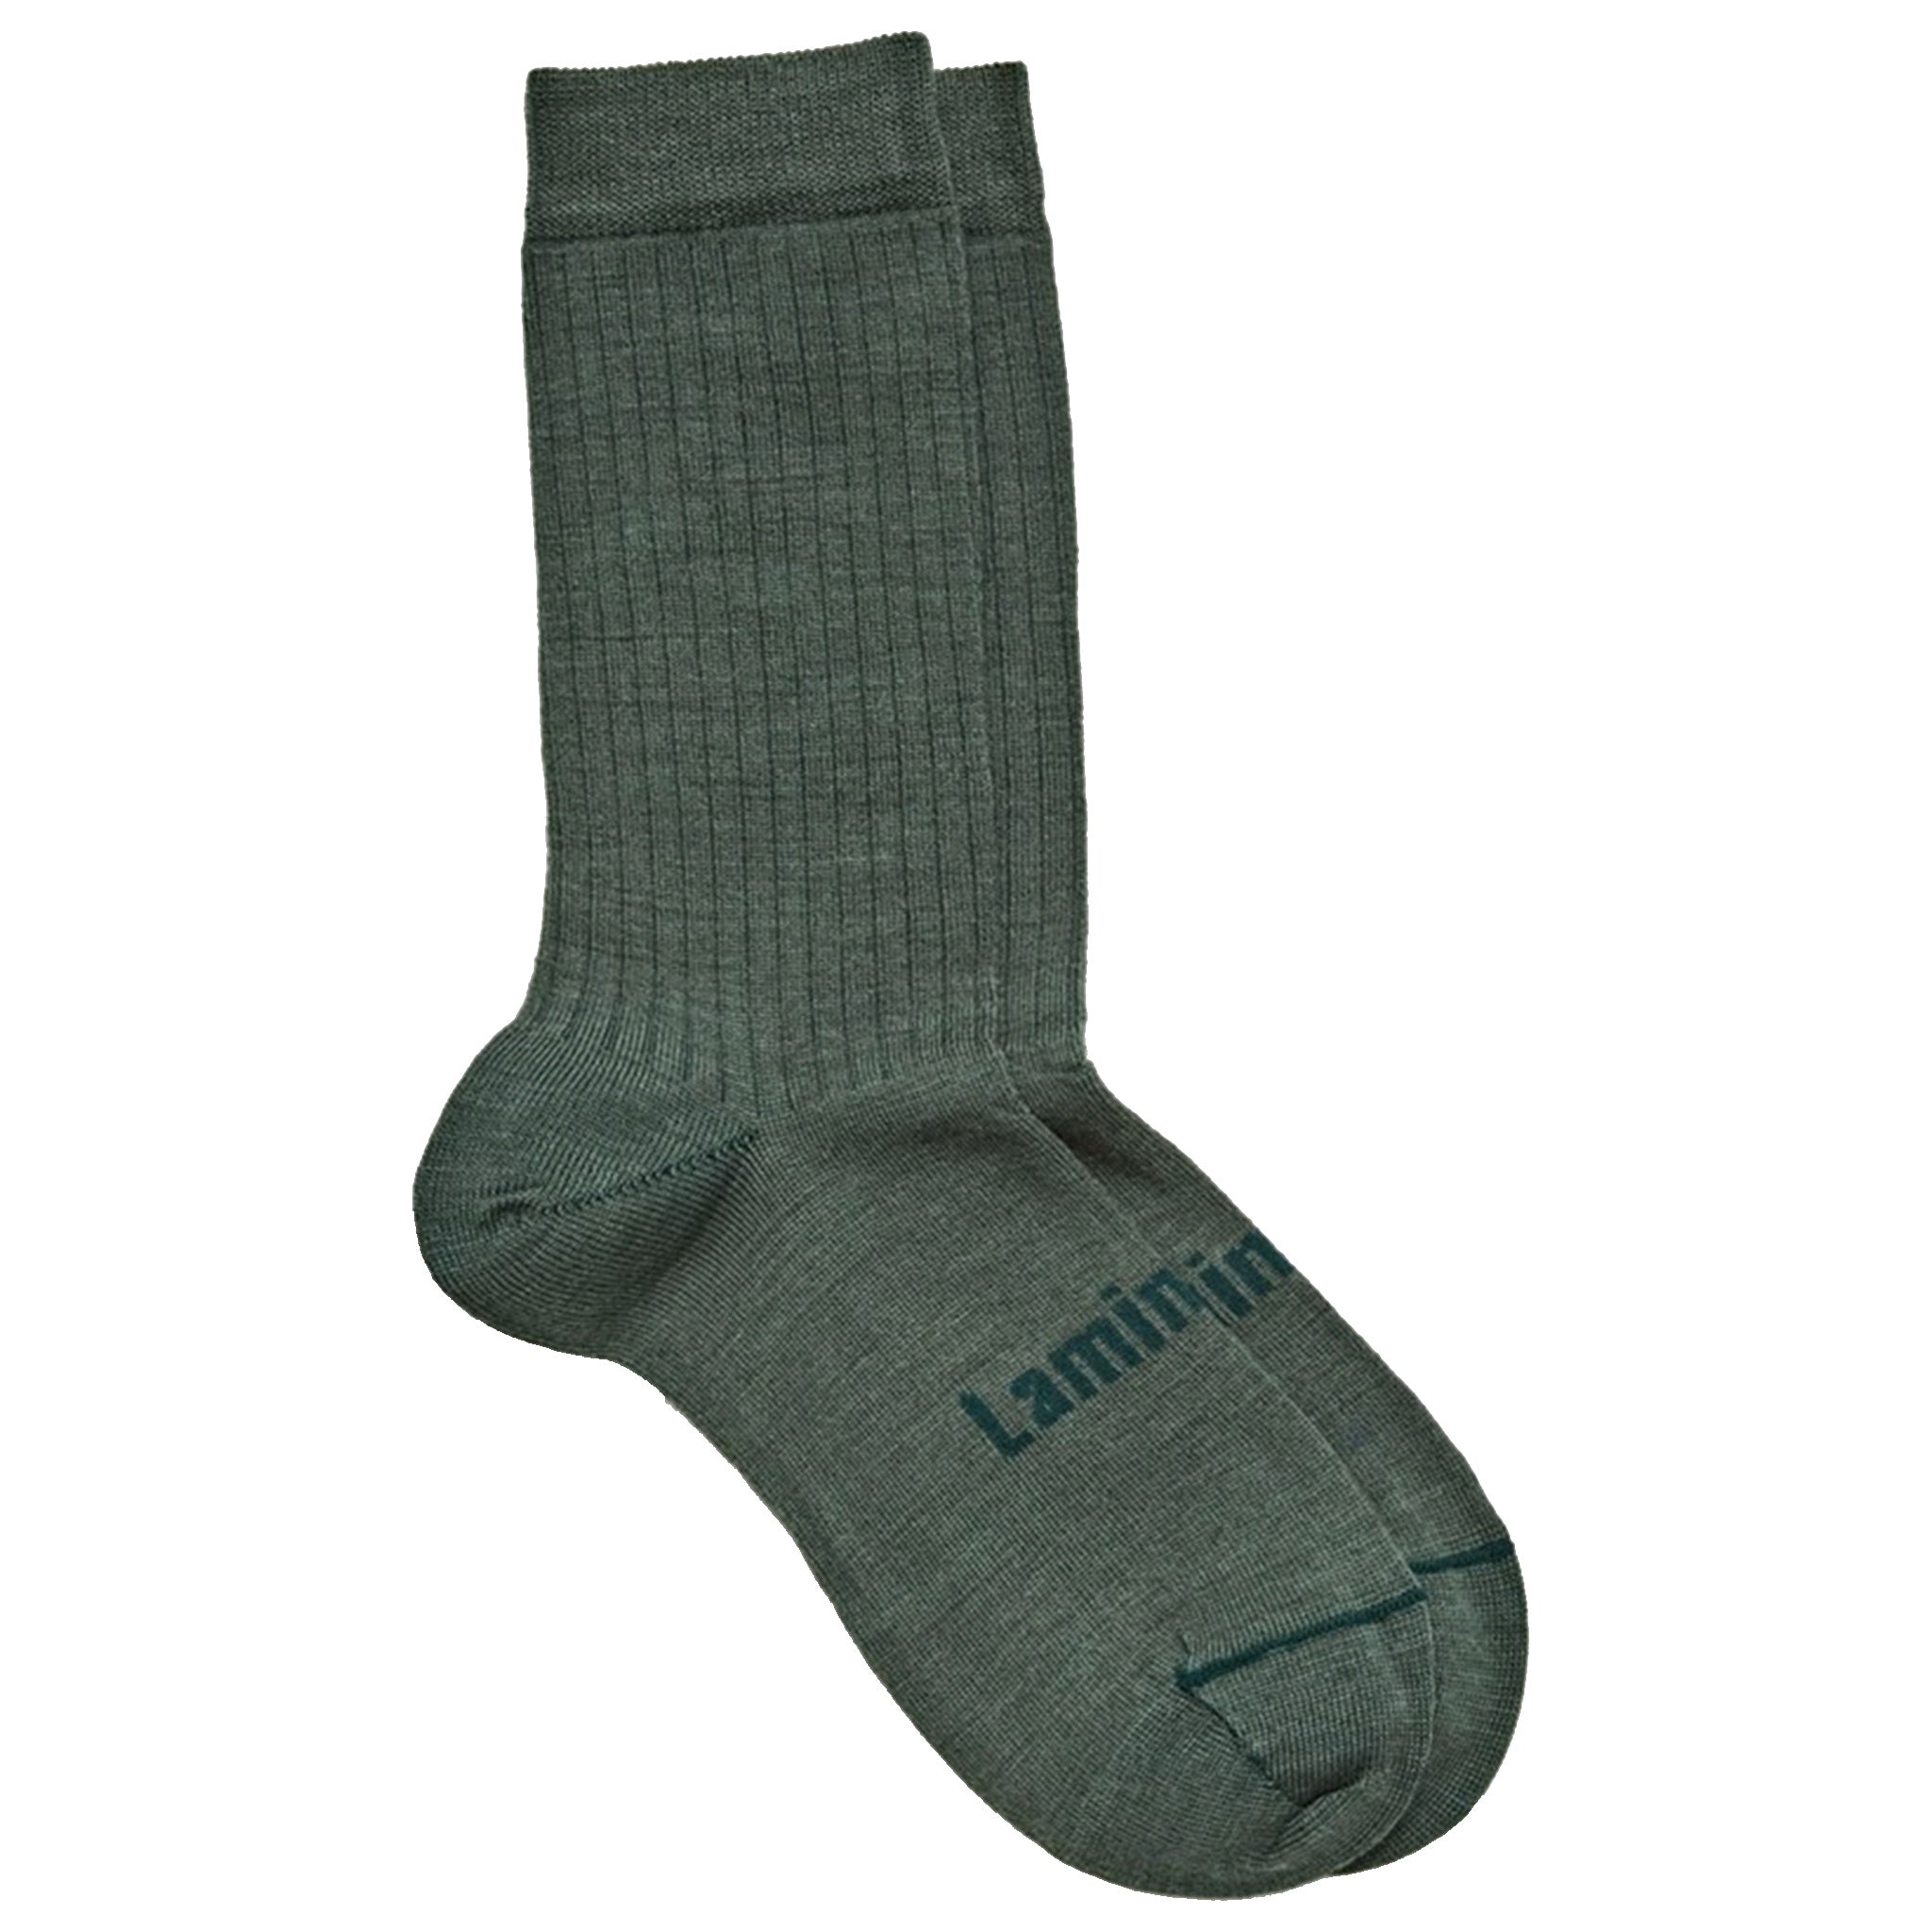 Lamington Merino Adult Crew Socks - Tuatara